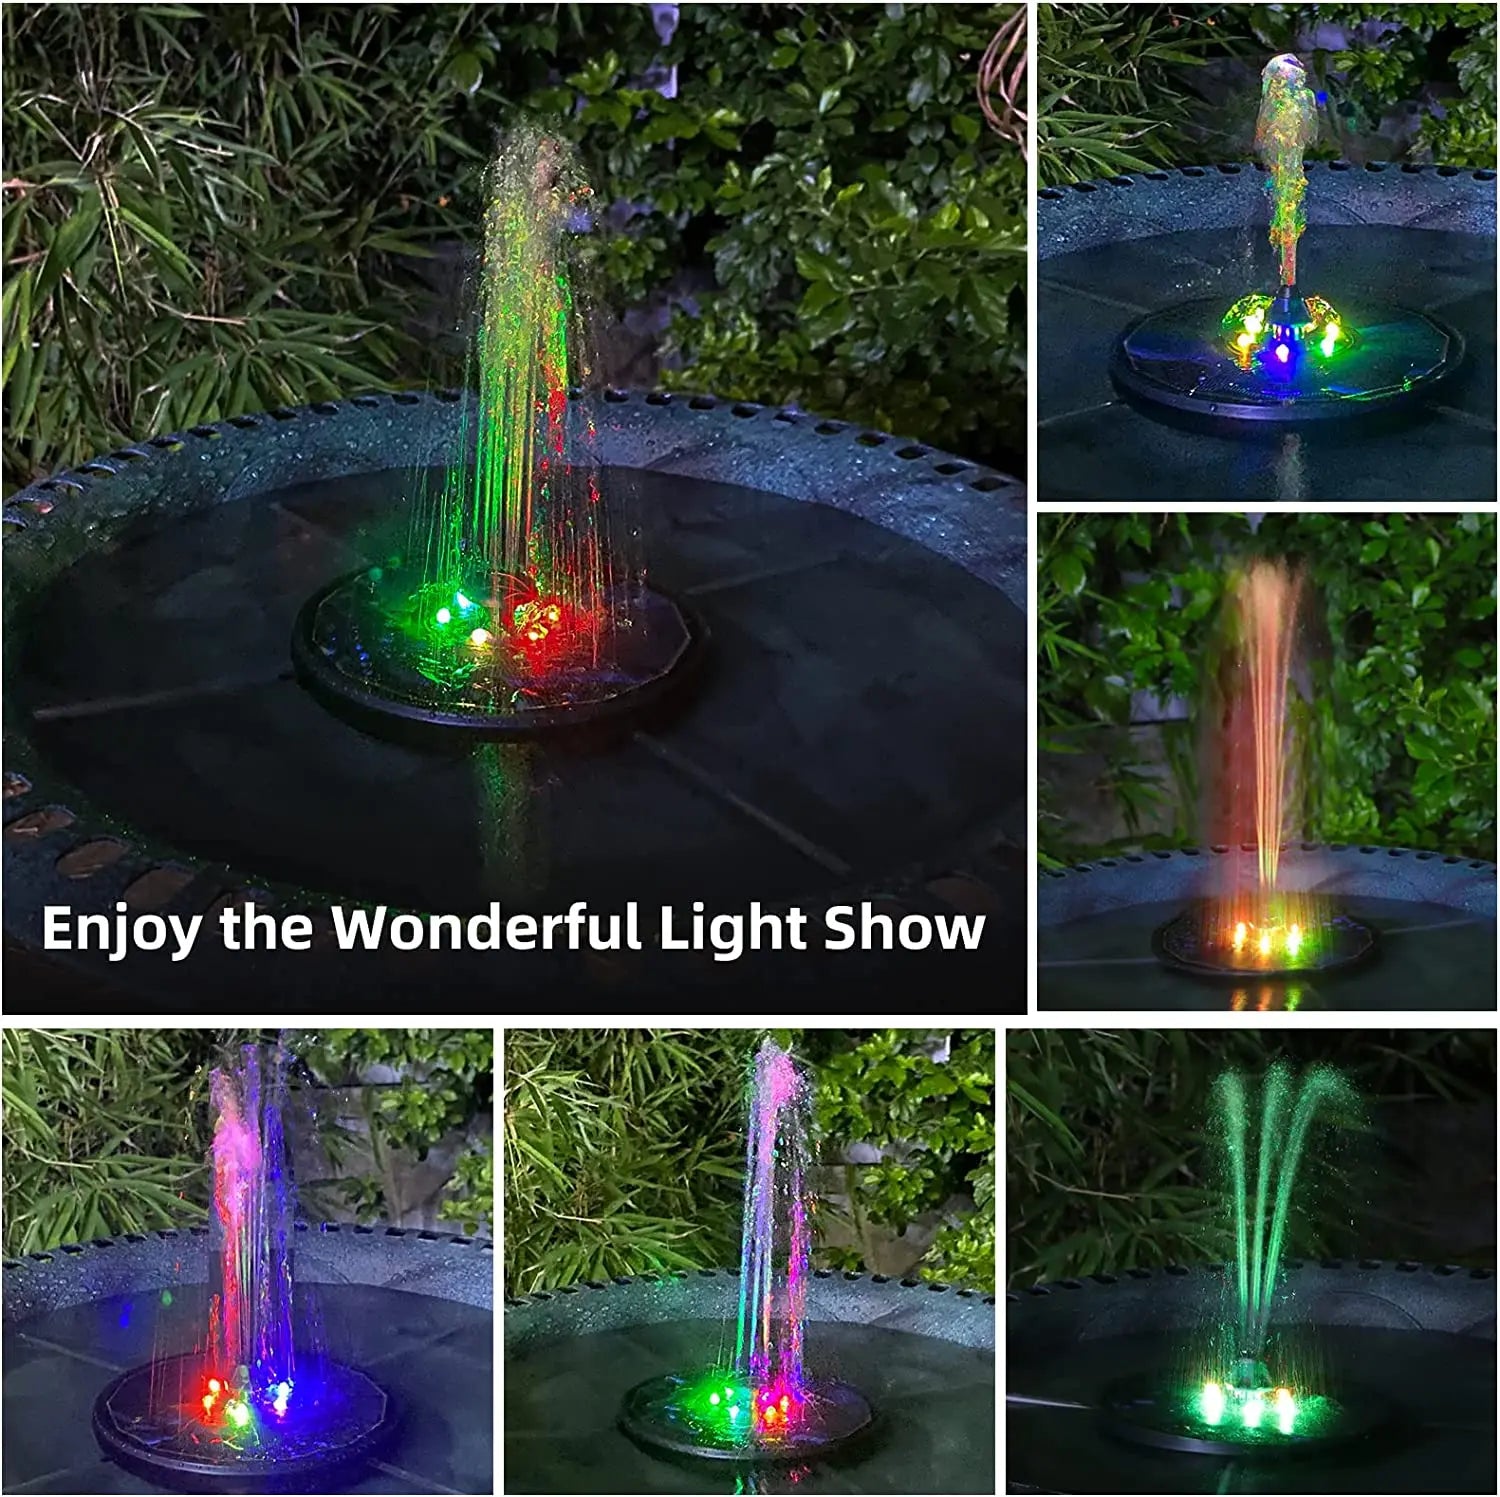 3W Solar Fountain, Enchanting color LED lights create a mesmerizing display